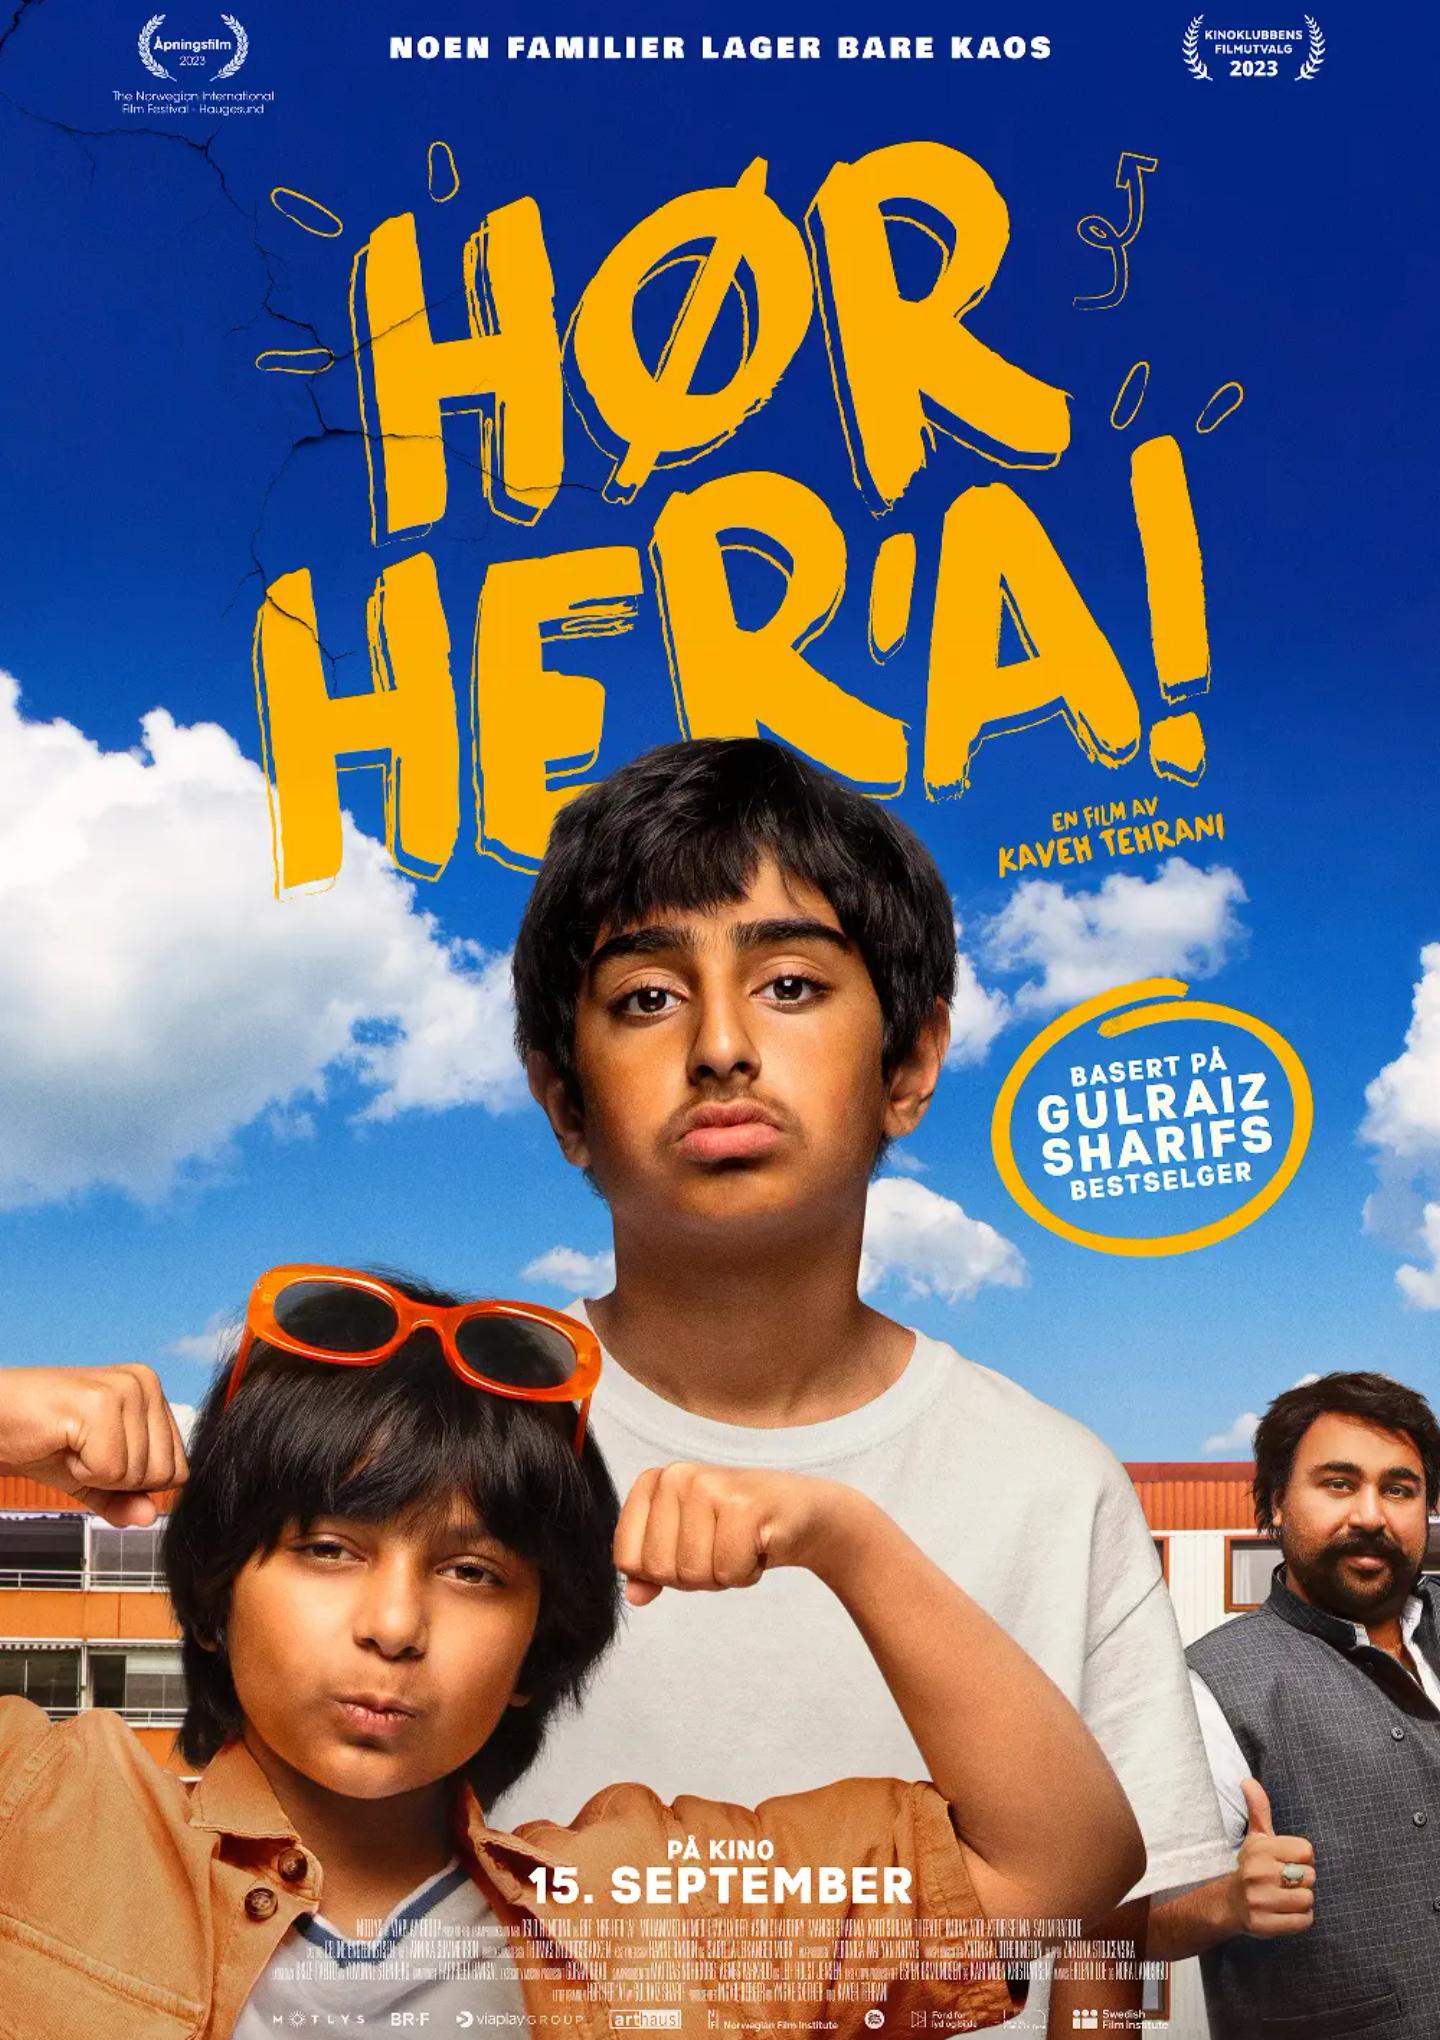 Plakat for 'Hør her'a!'